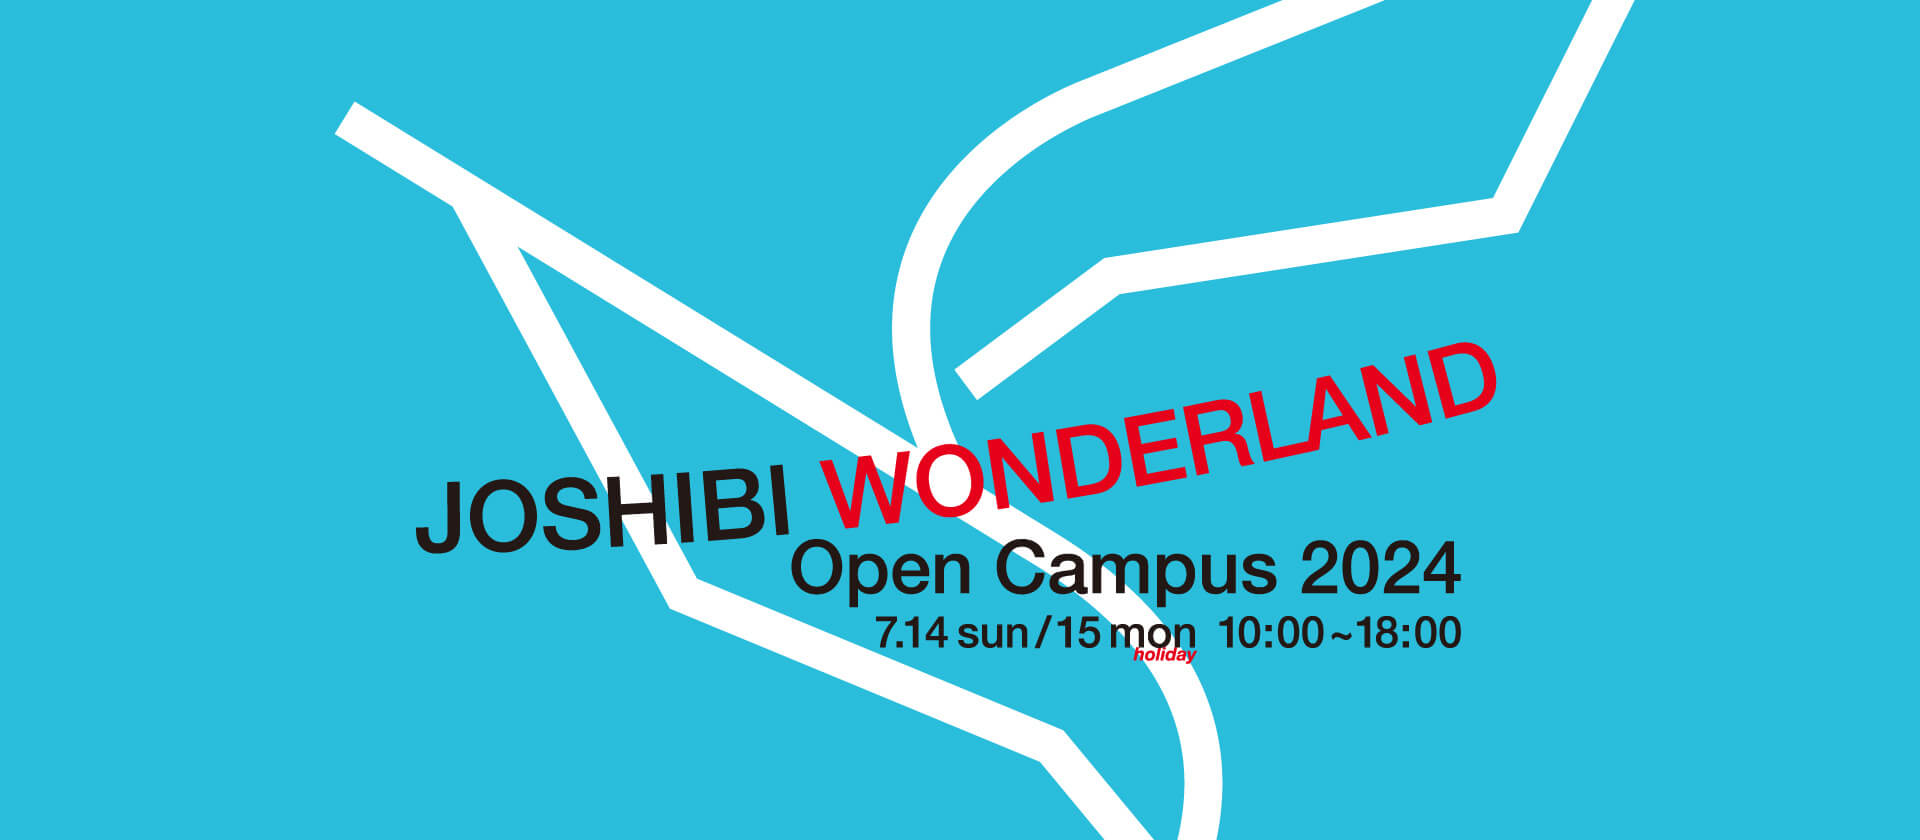 JOSHIBI WONDERLAND Open Campus 2024